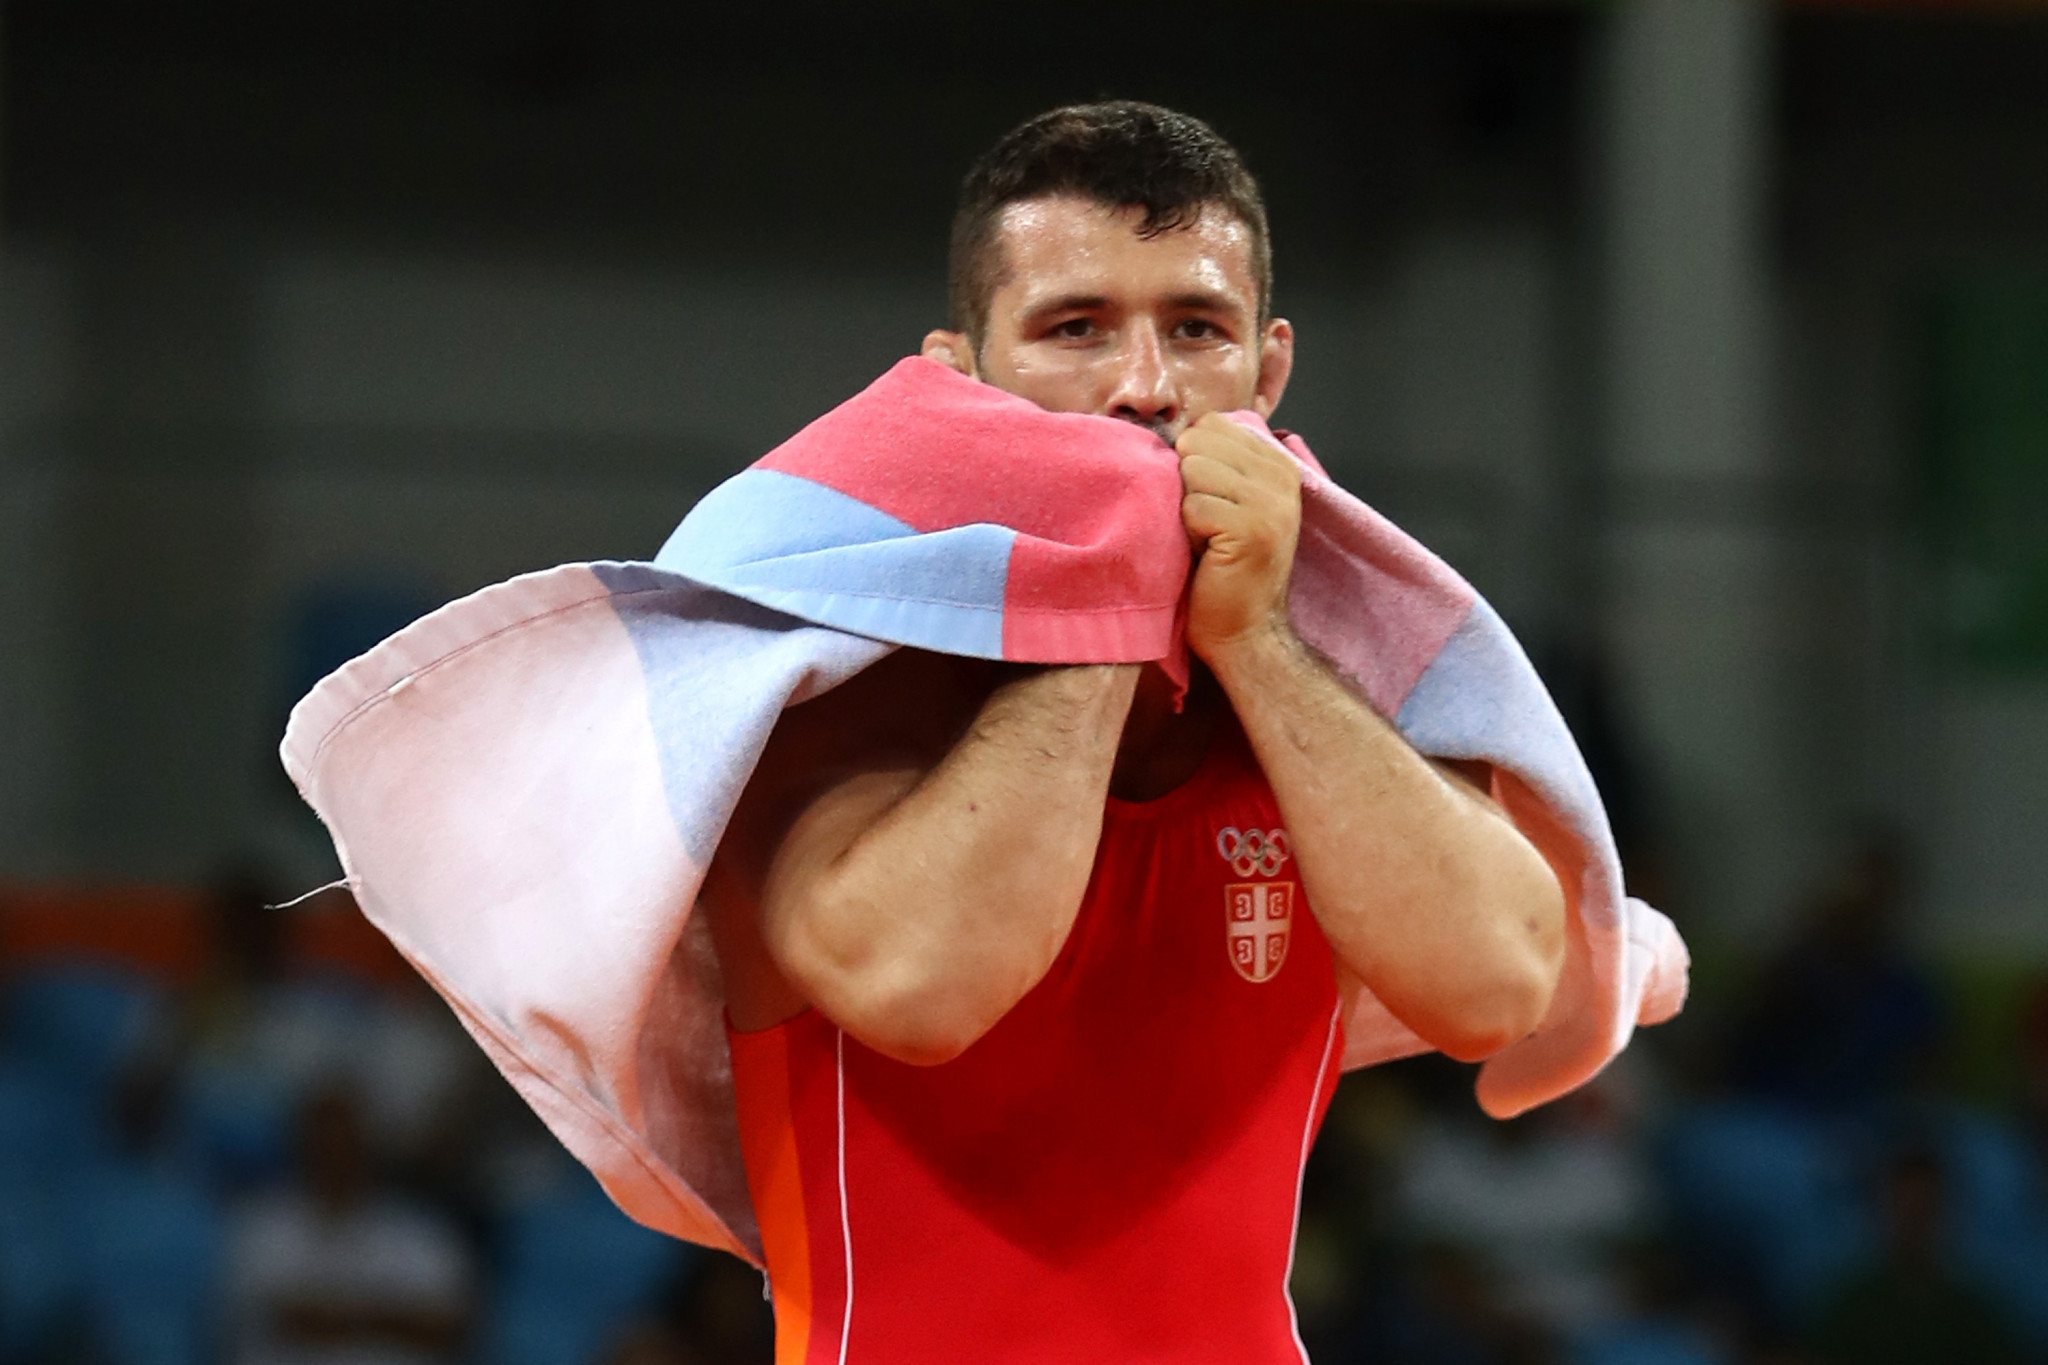 Davor Štefanek, a Rio 2016 champion, has retired from wrestling ©Getty Images